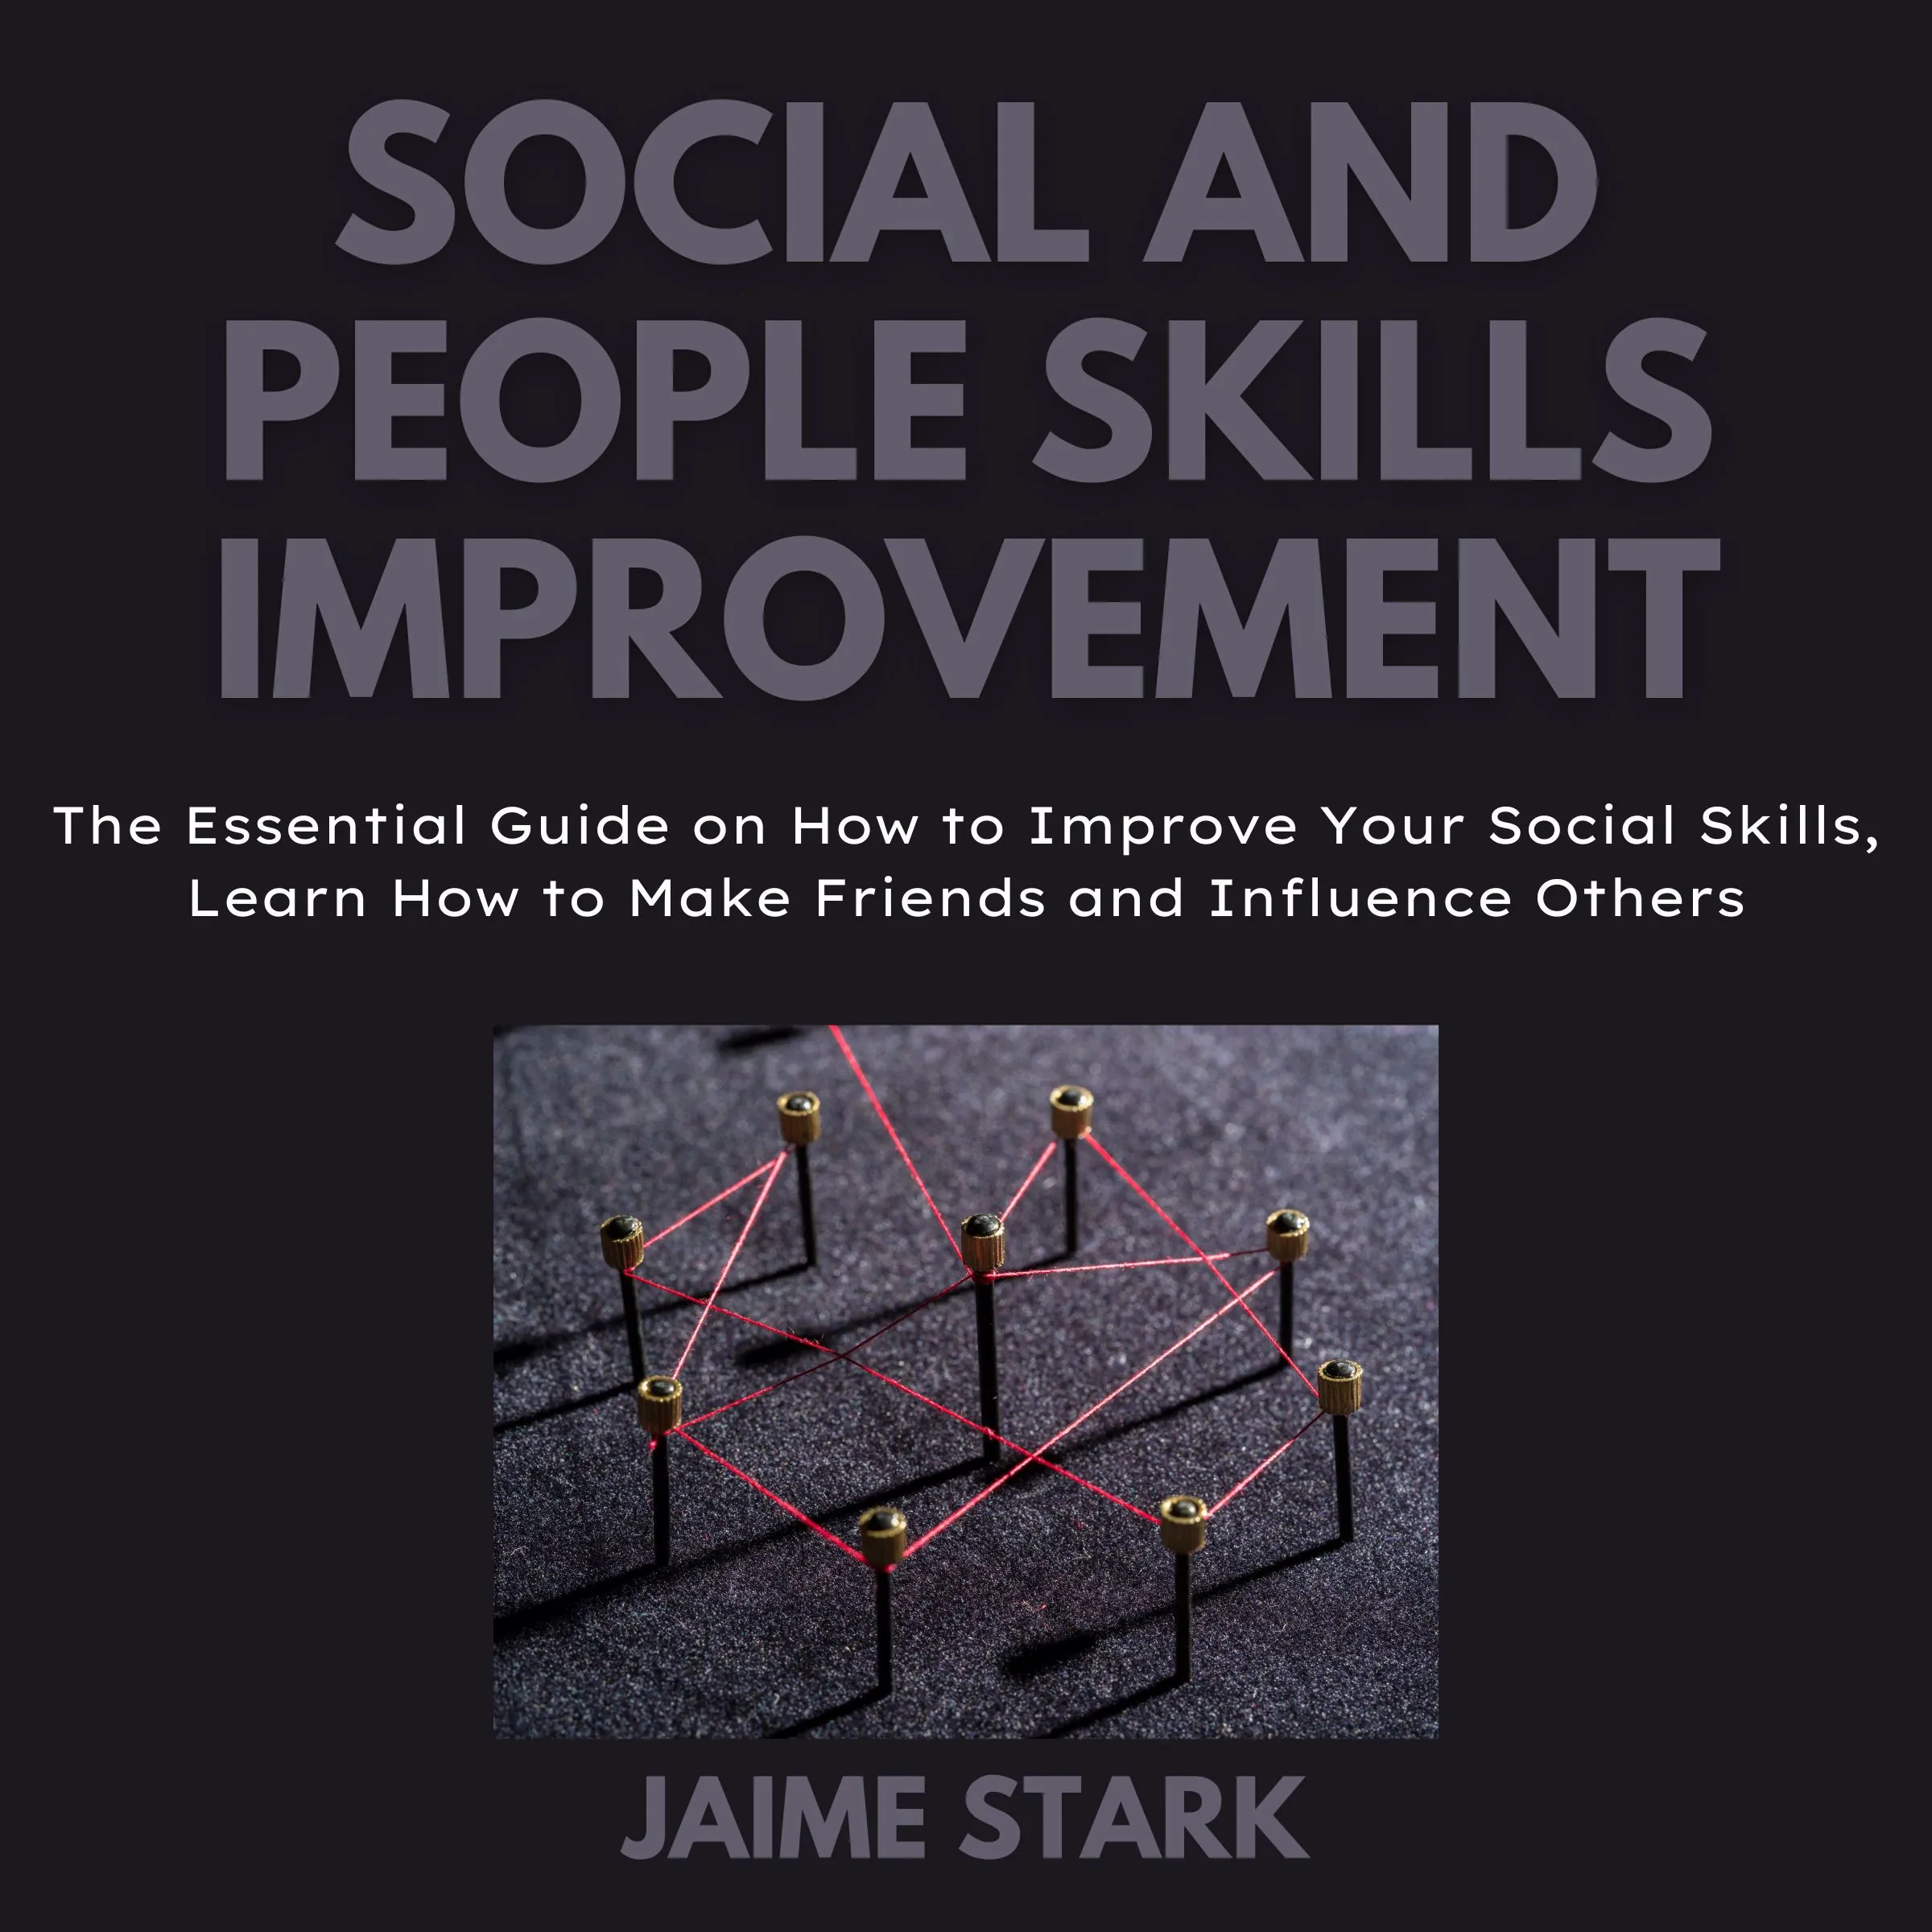 Social and People Skills Improvement by Jaime Stark Audiobook